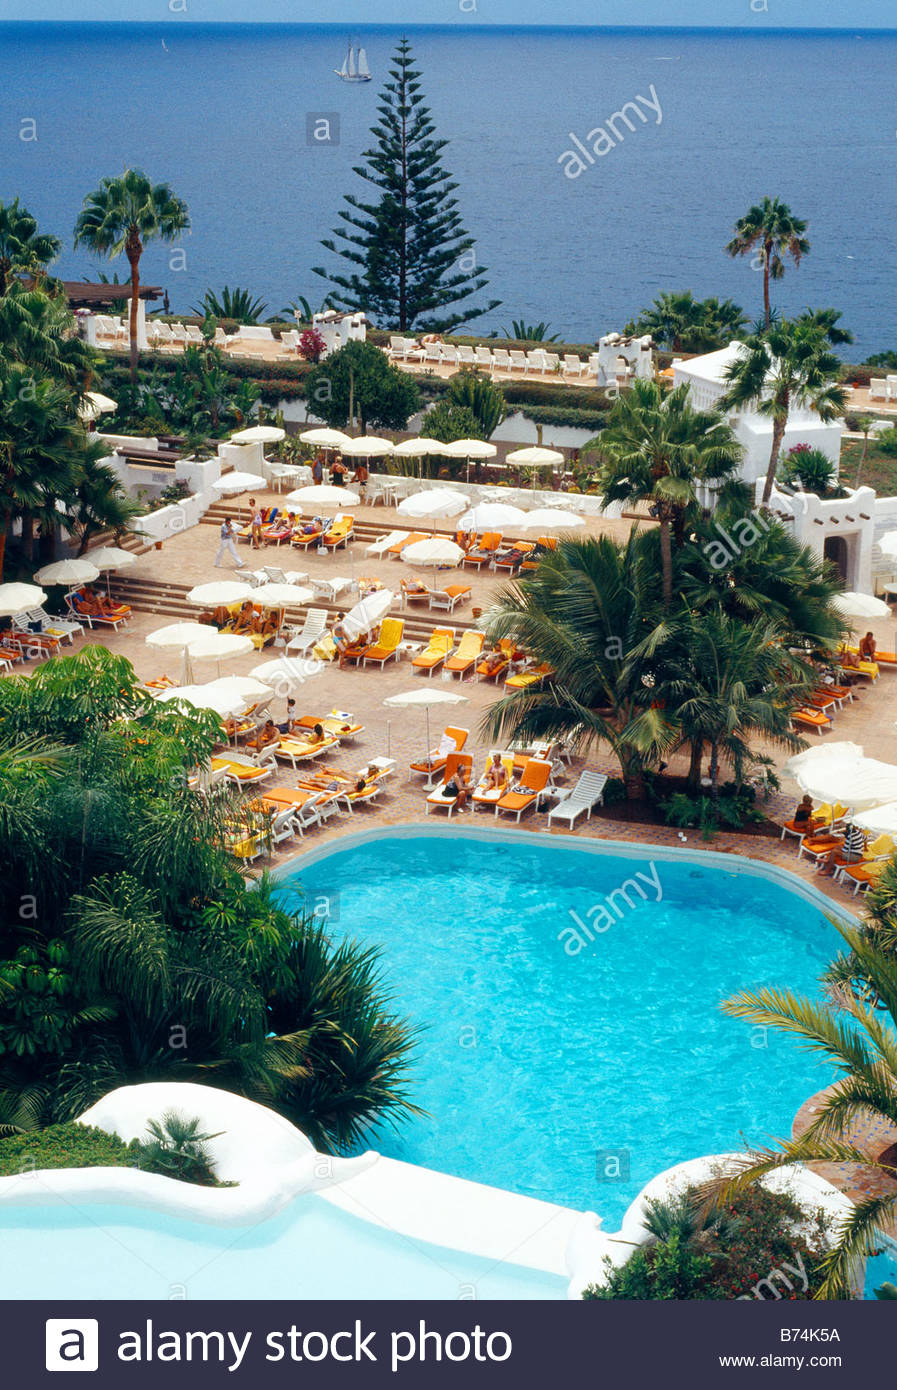 swimming pool in luxury hotel adeje tenerife island canary islands B74K5A